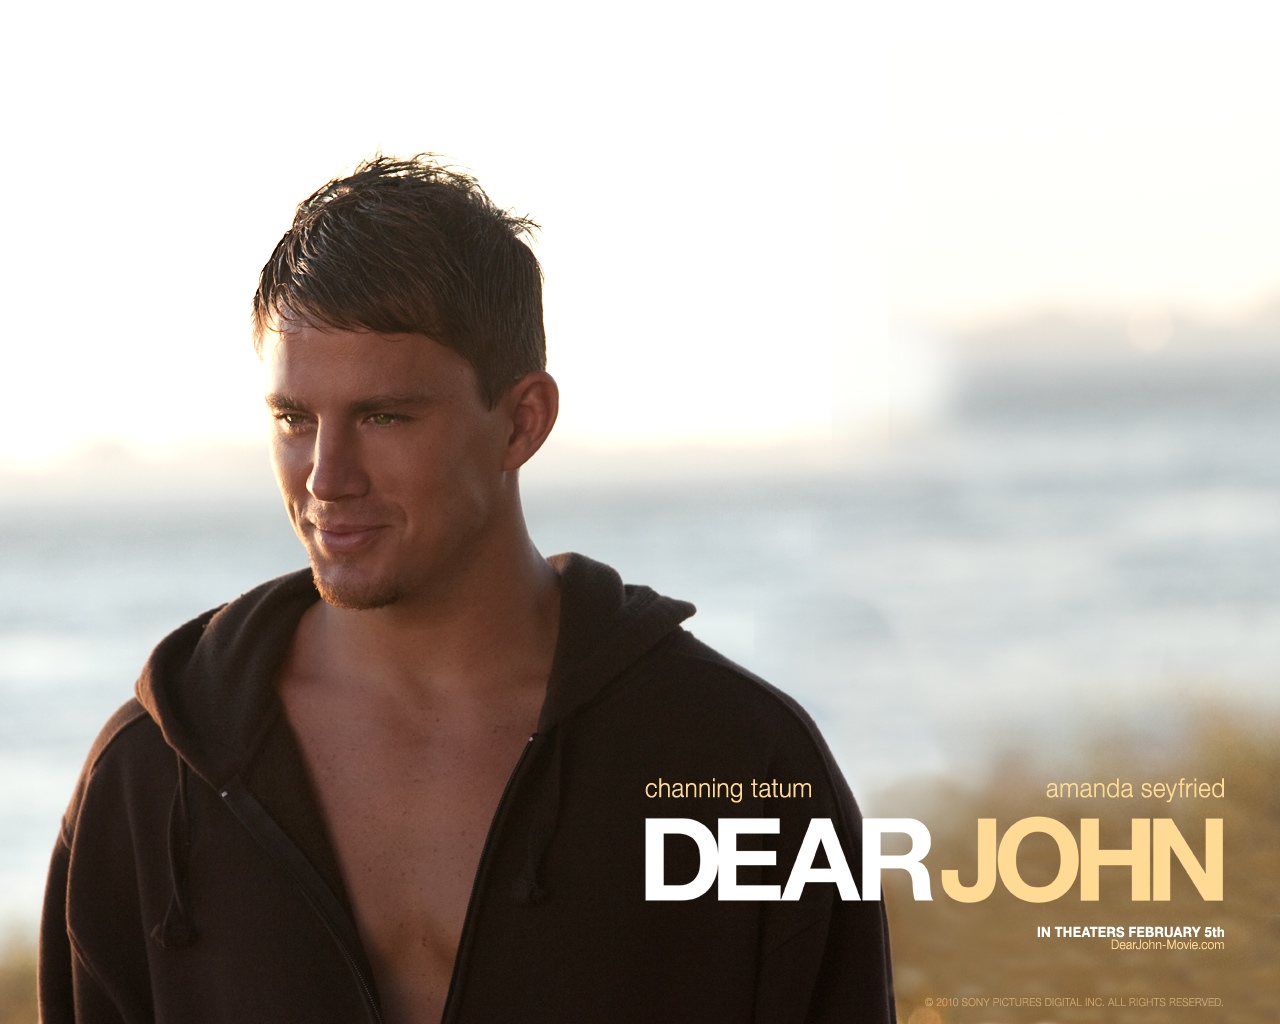 New Wallpaper and Twitter Skins for Channing Tatum's 'Dear John'